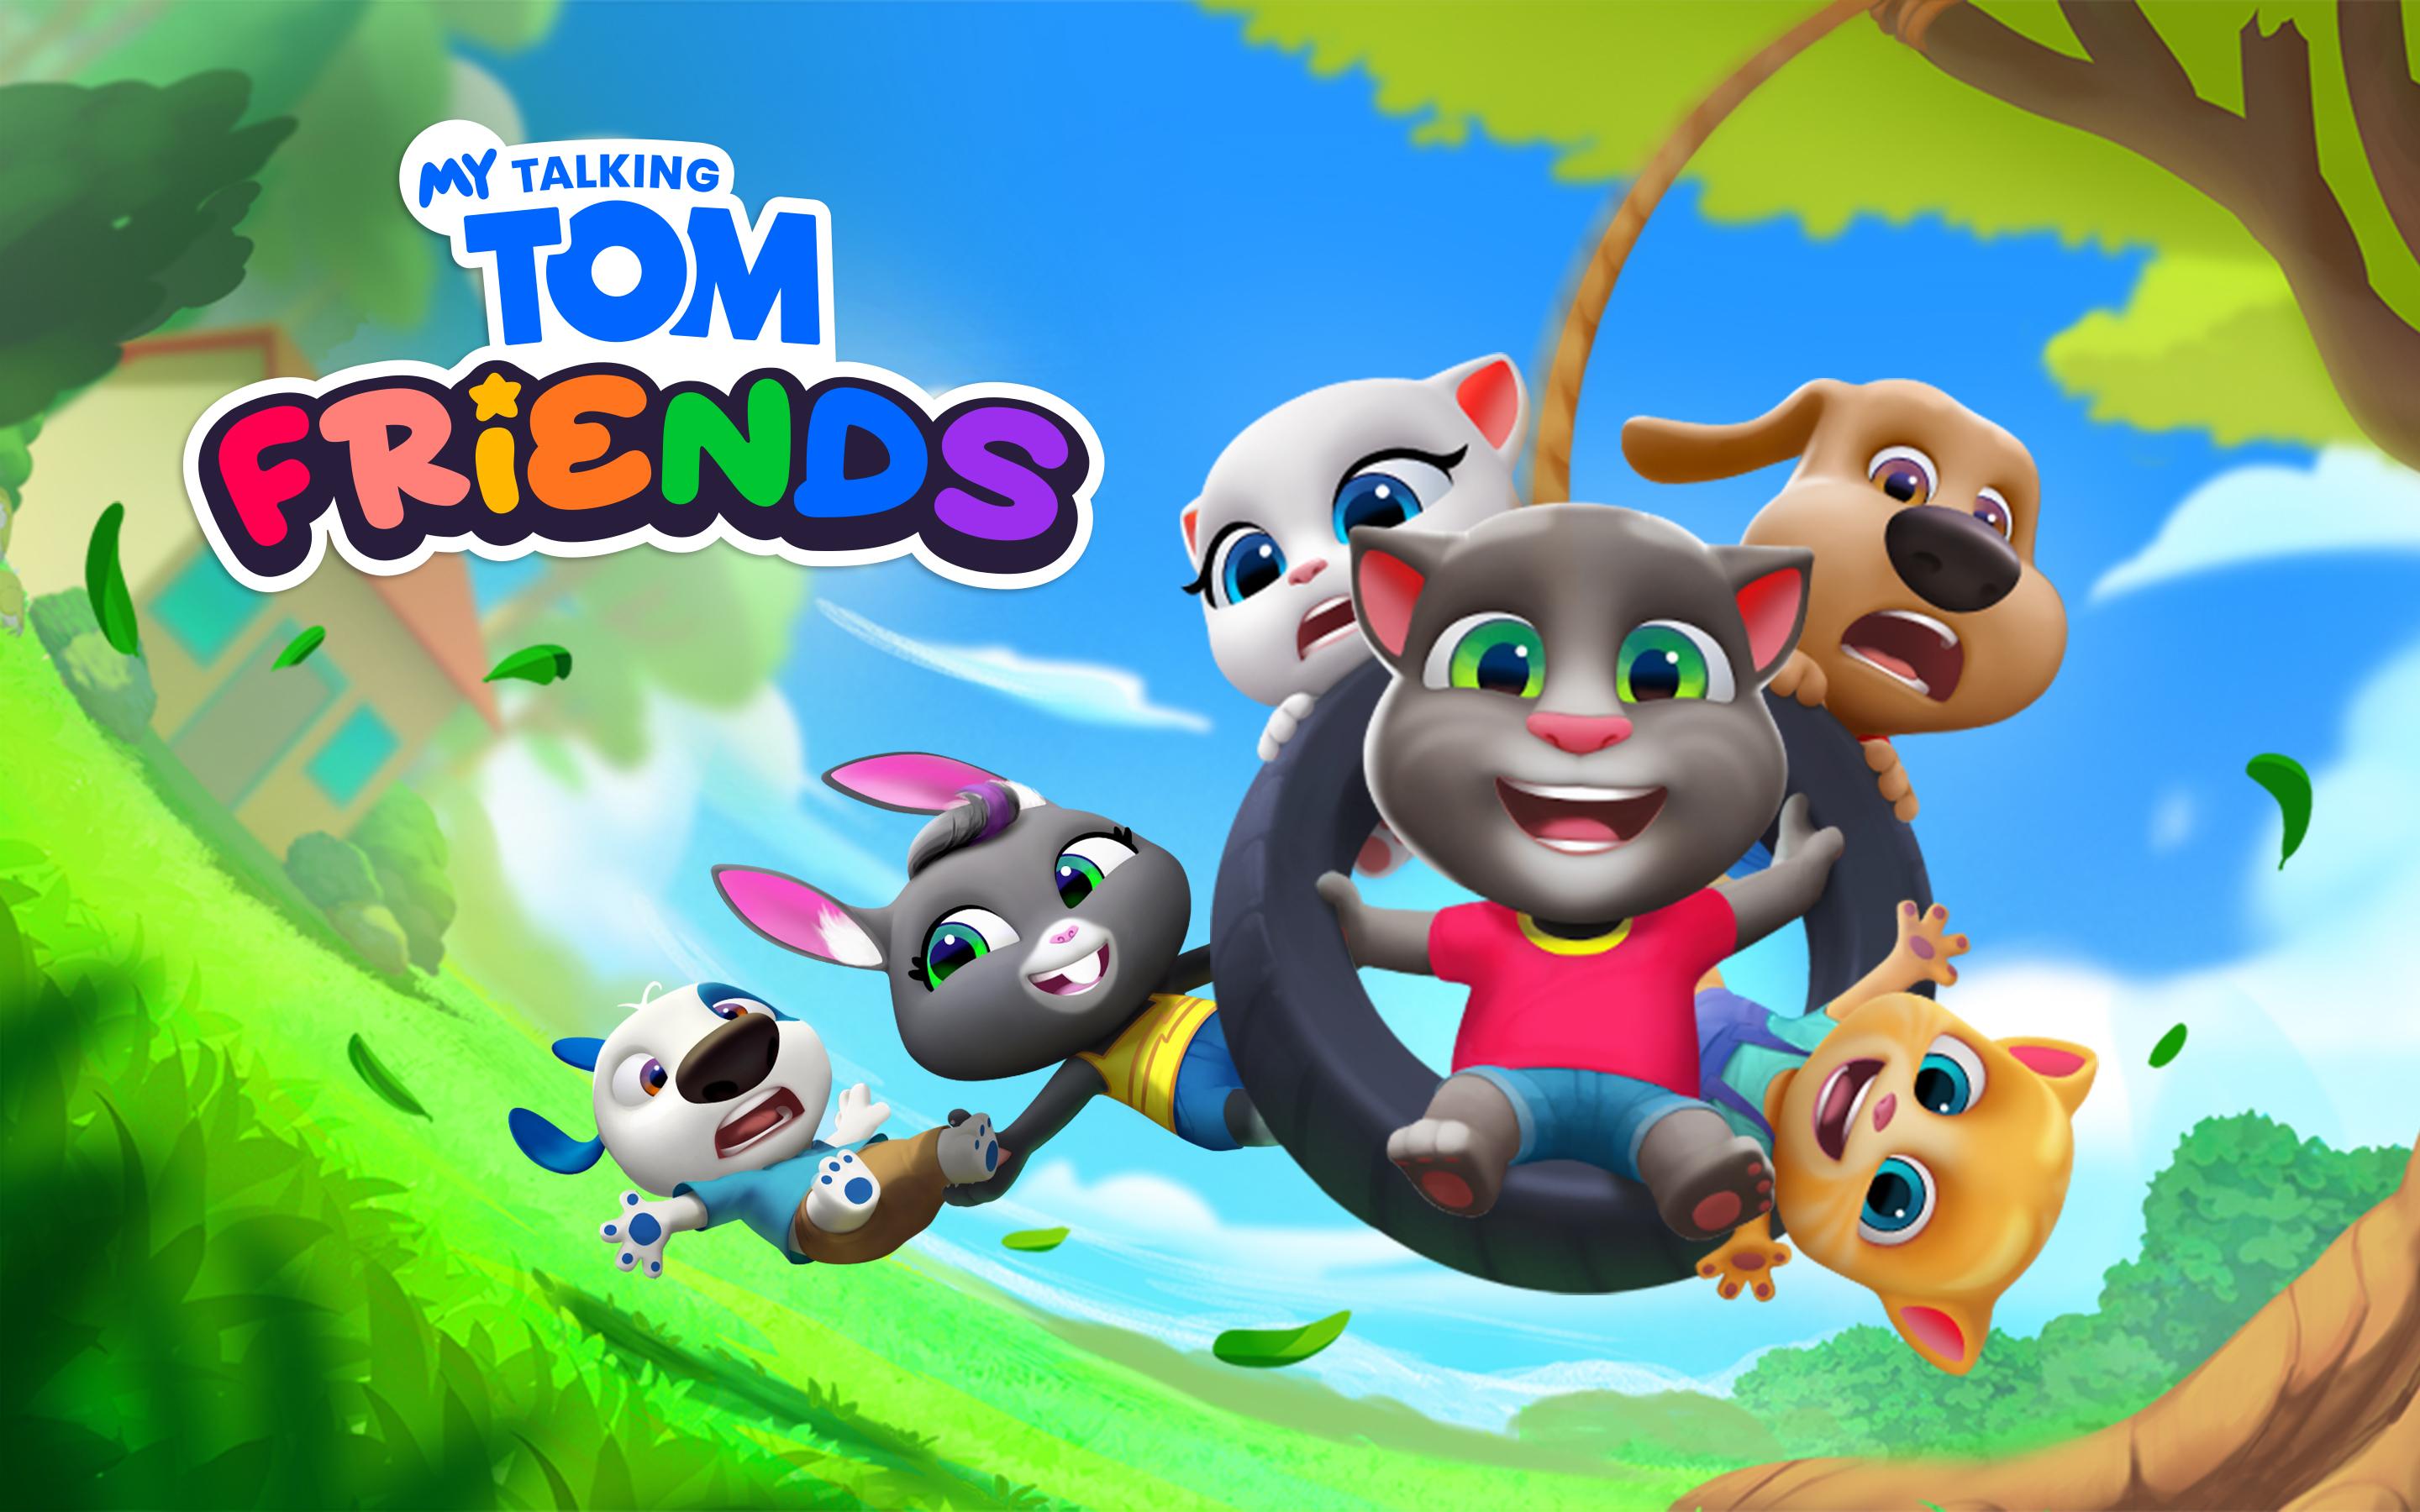 Tom friends game